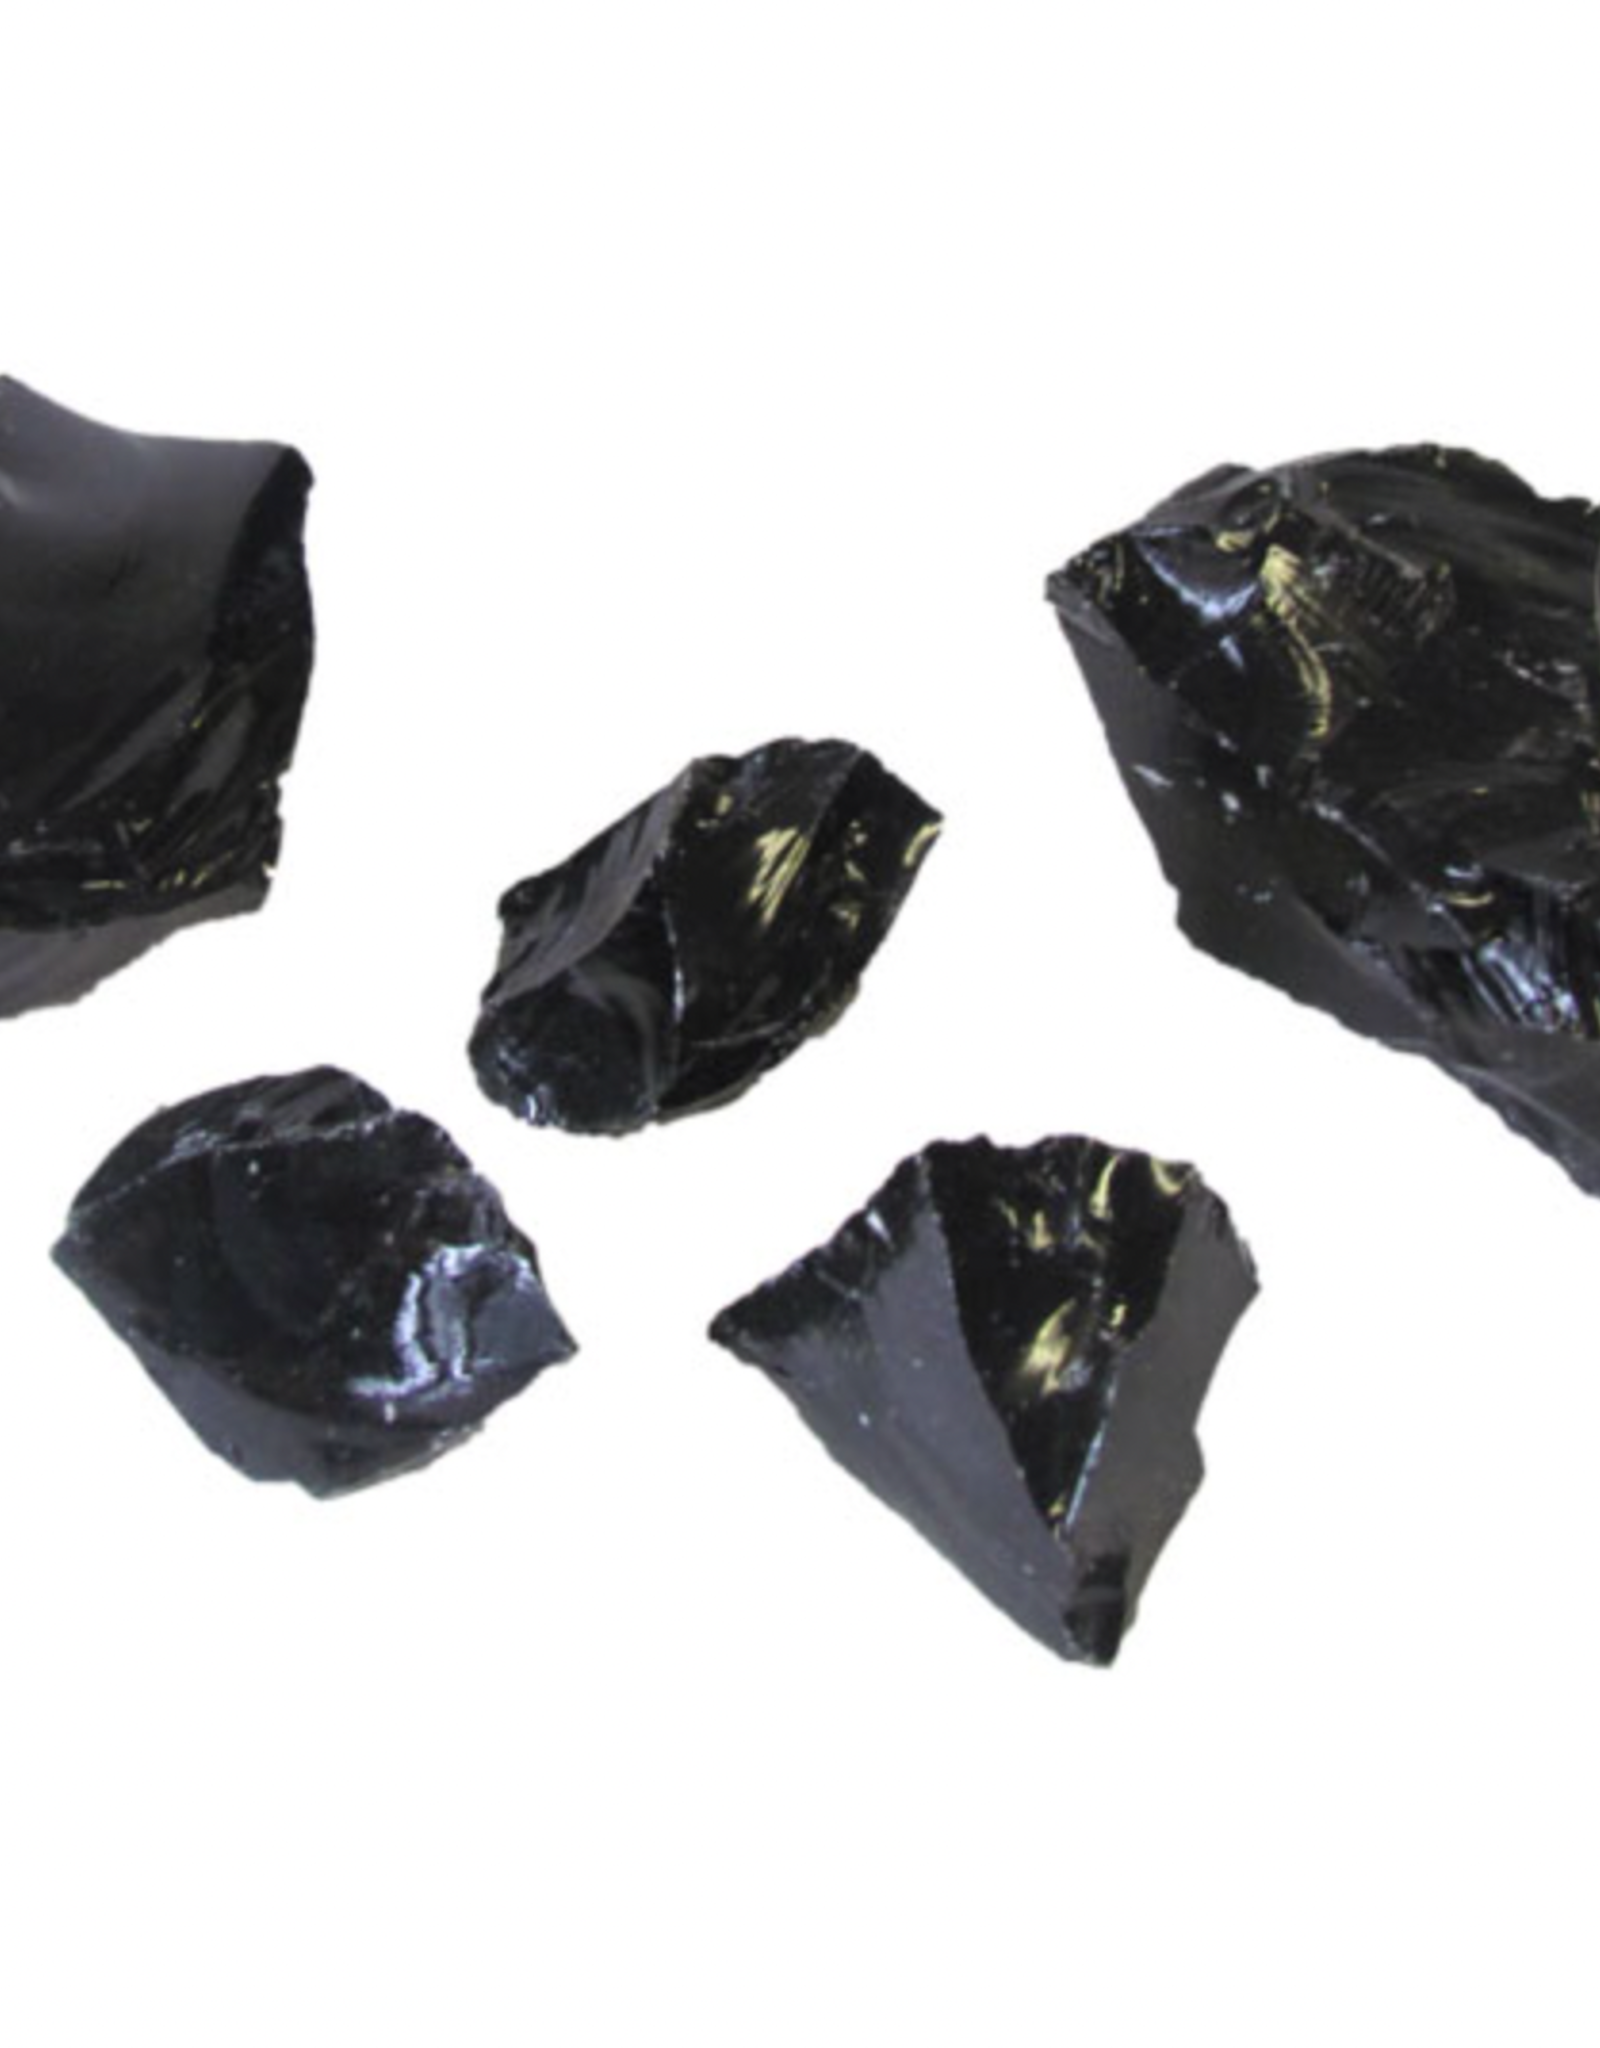 Black Obsidian - Rough Chunk